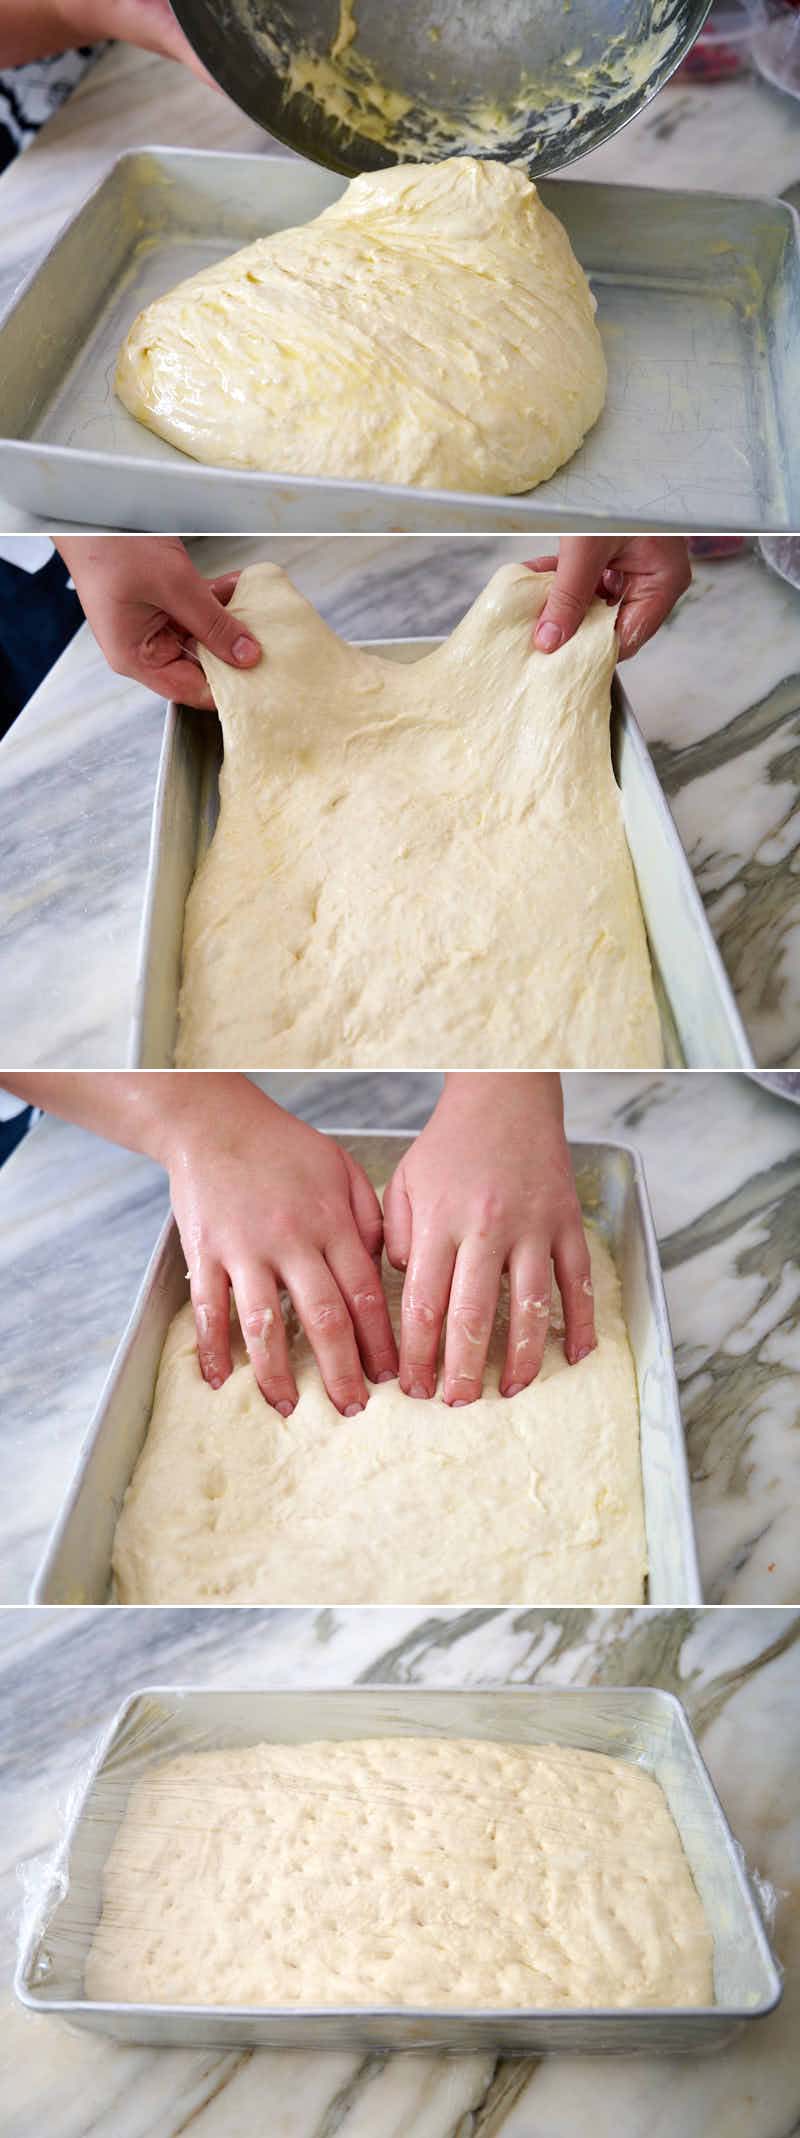 Stretching focaccia dough in pan.